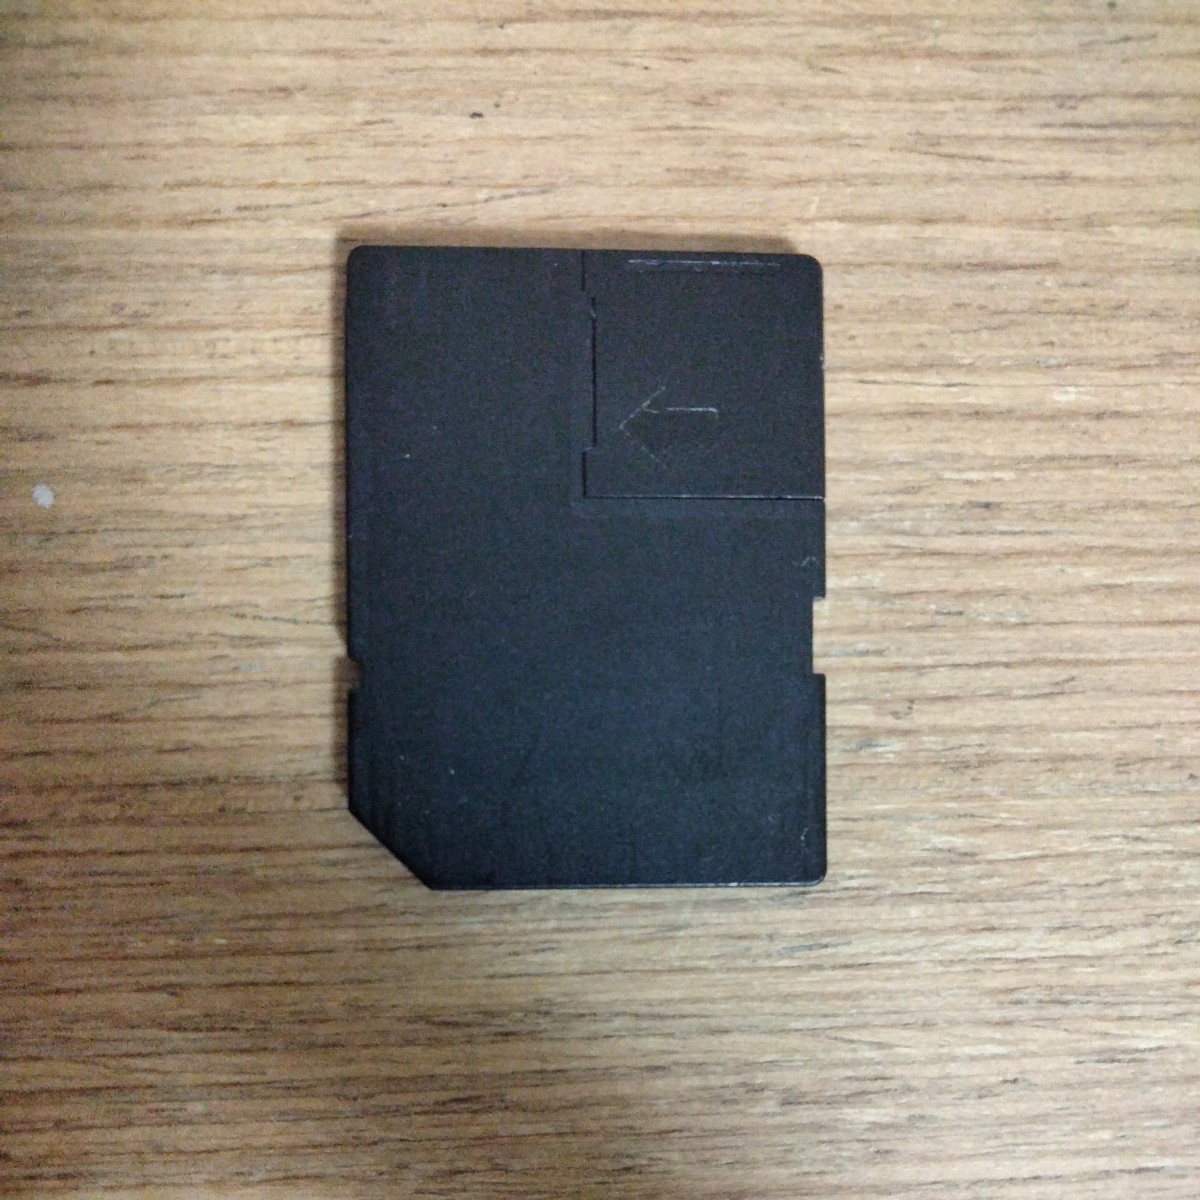 USBコネクタ搭載SDカード 512MB PDC MEDIAFO PSdカードの画像2